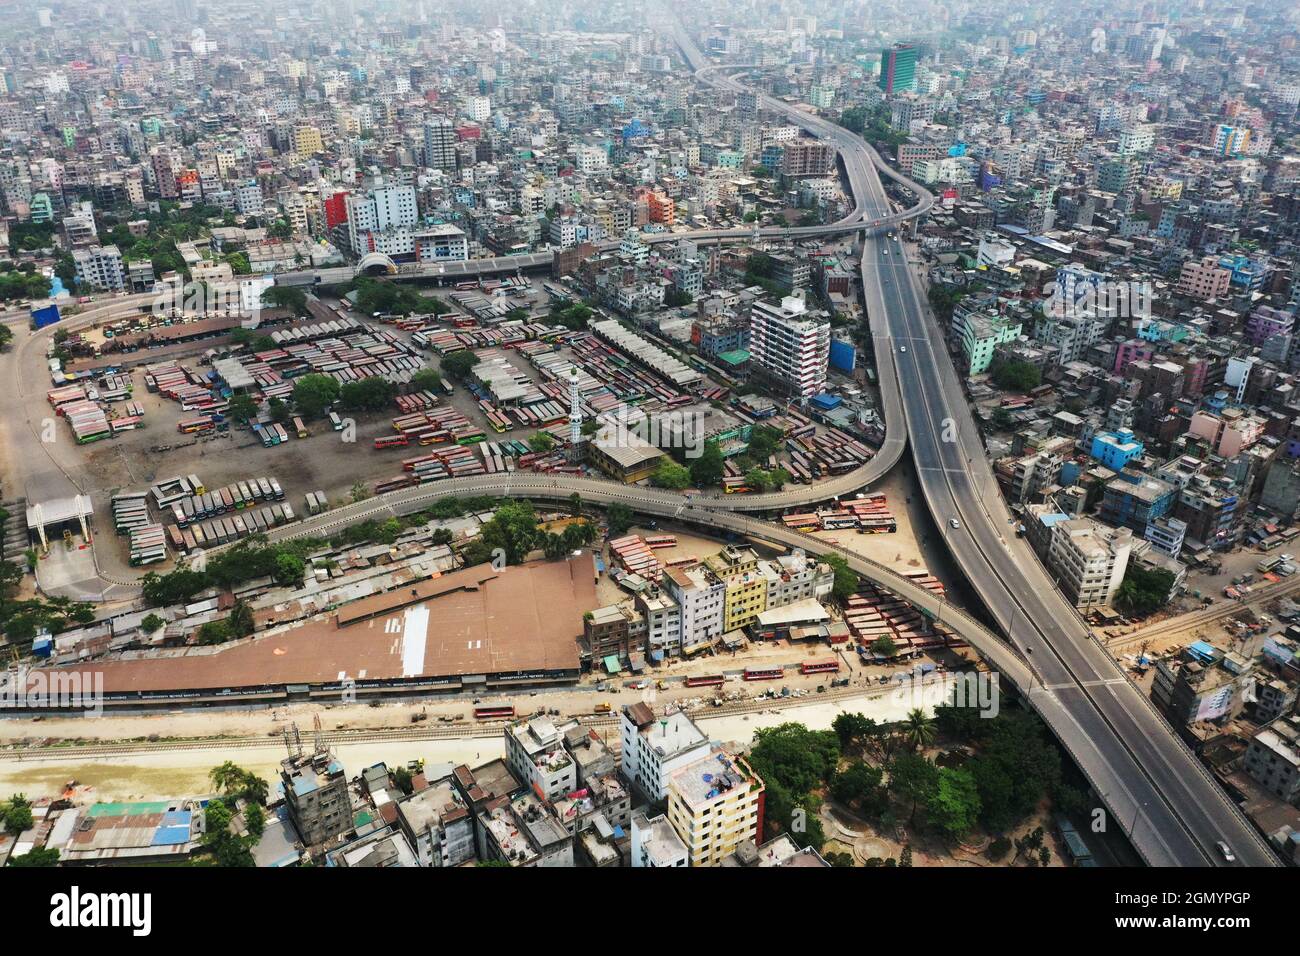 Dhaka, Bangladesh - April 15, 2021: The Bird's-eye view of Jatrabari area at Dhaka city in Bangladesh. Stock Photo